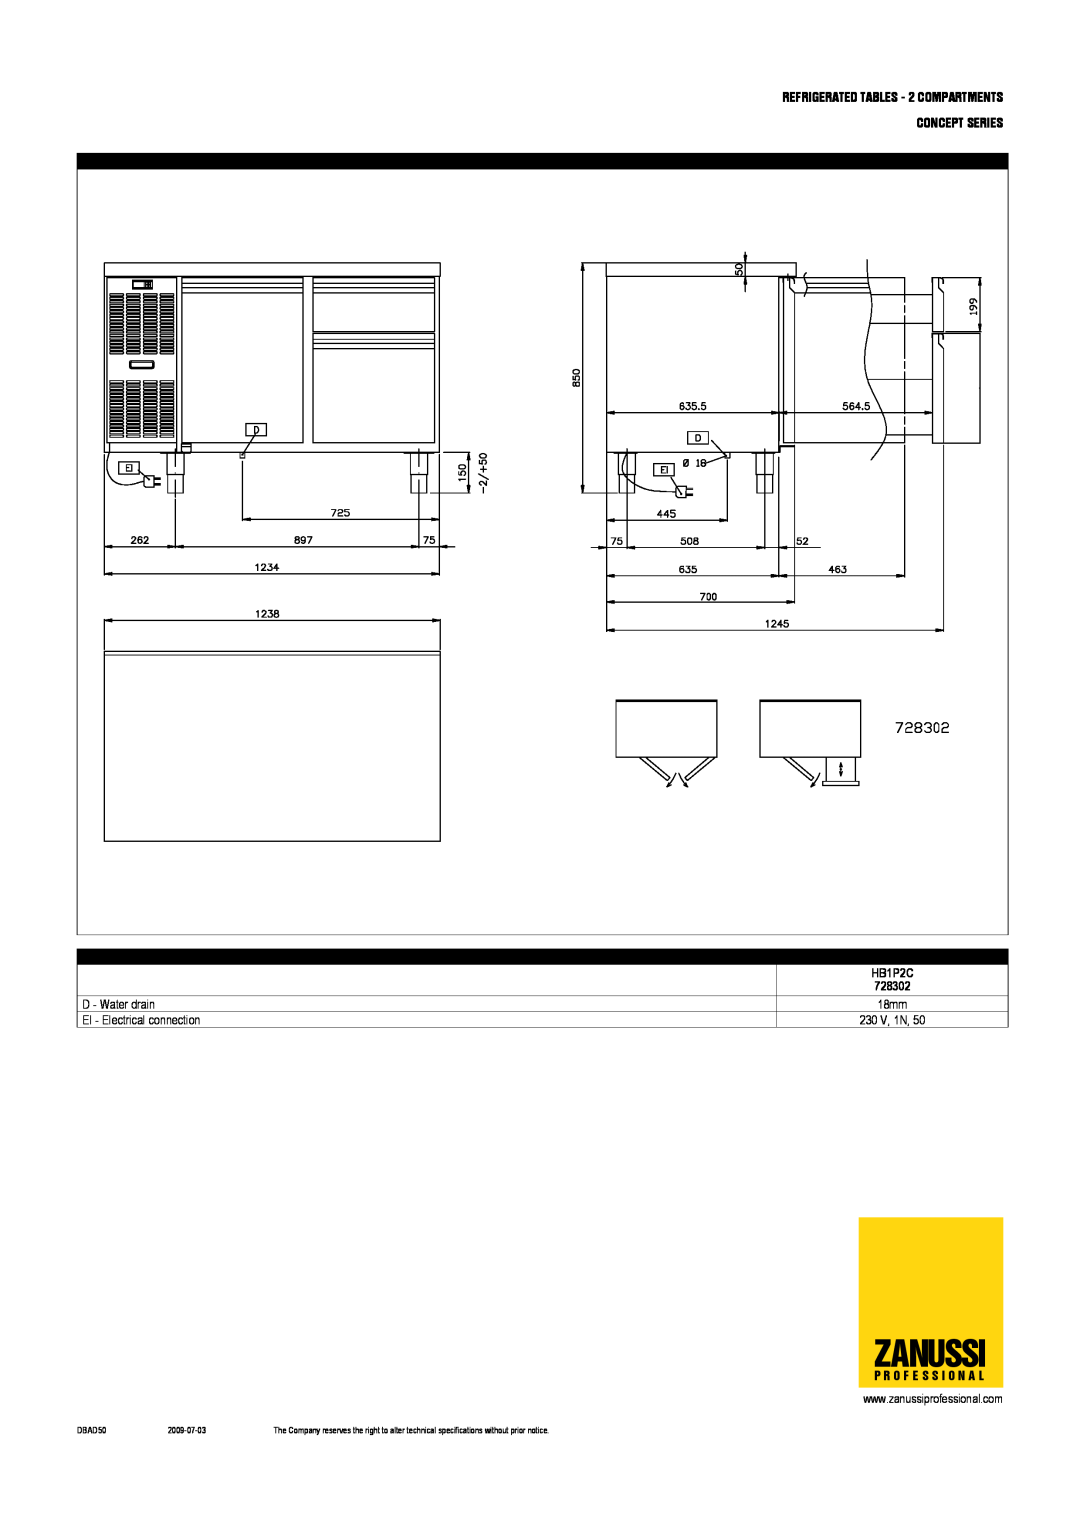 Zanussi 728086 Zanussi, REFRIGERATED TABLES - 2 COMPARTMENTS, Concept Series, HB1P2C, 728302, 18mm, DBAD50, 2009-07-03 